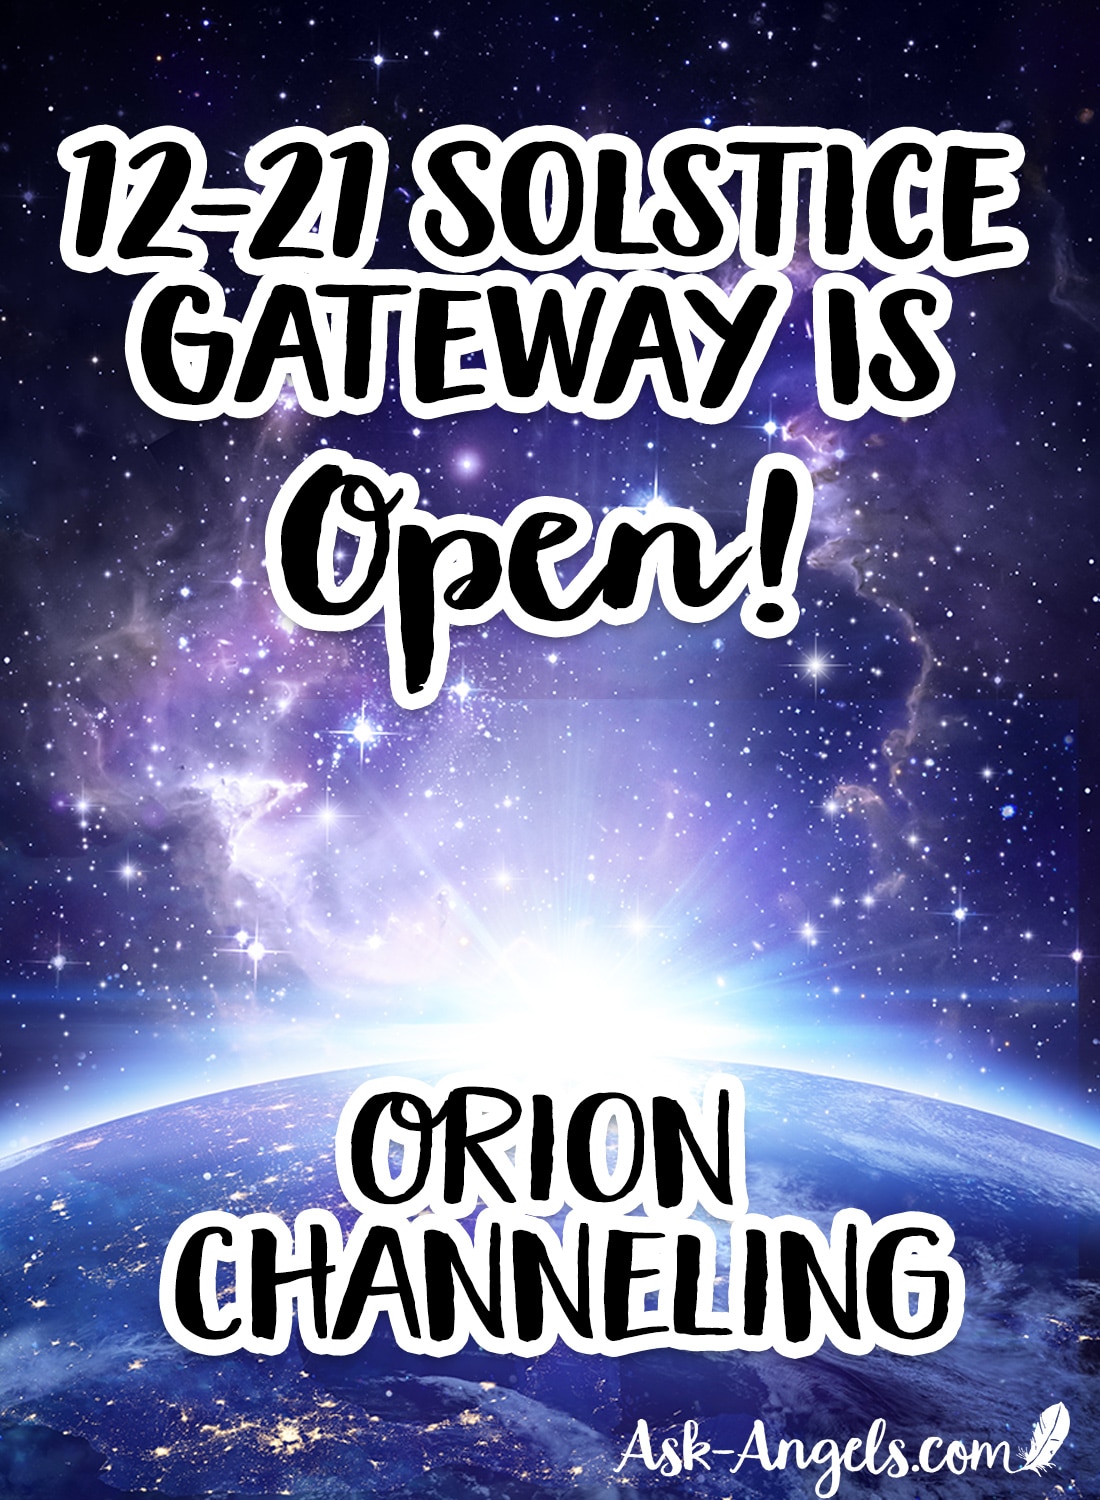 12-21 Solstice Gateway Is Open! Orion Channeling